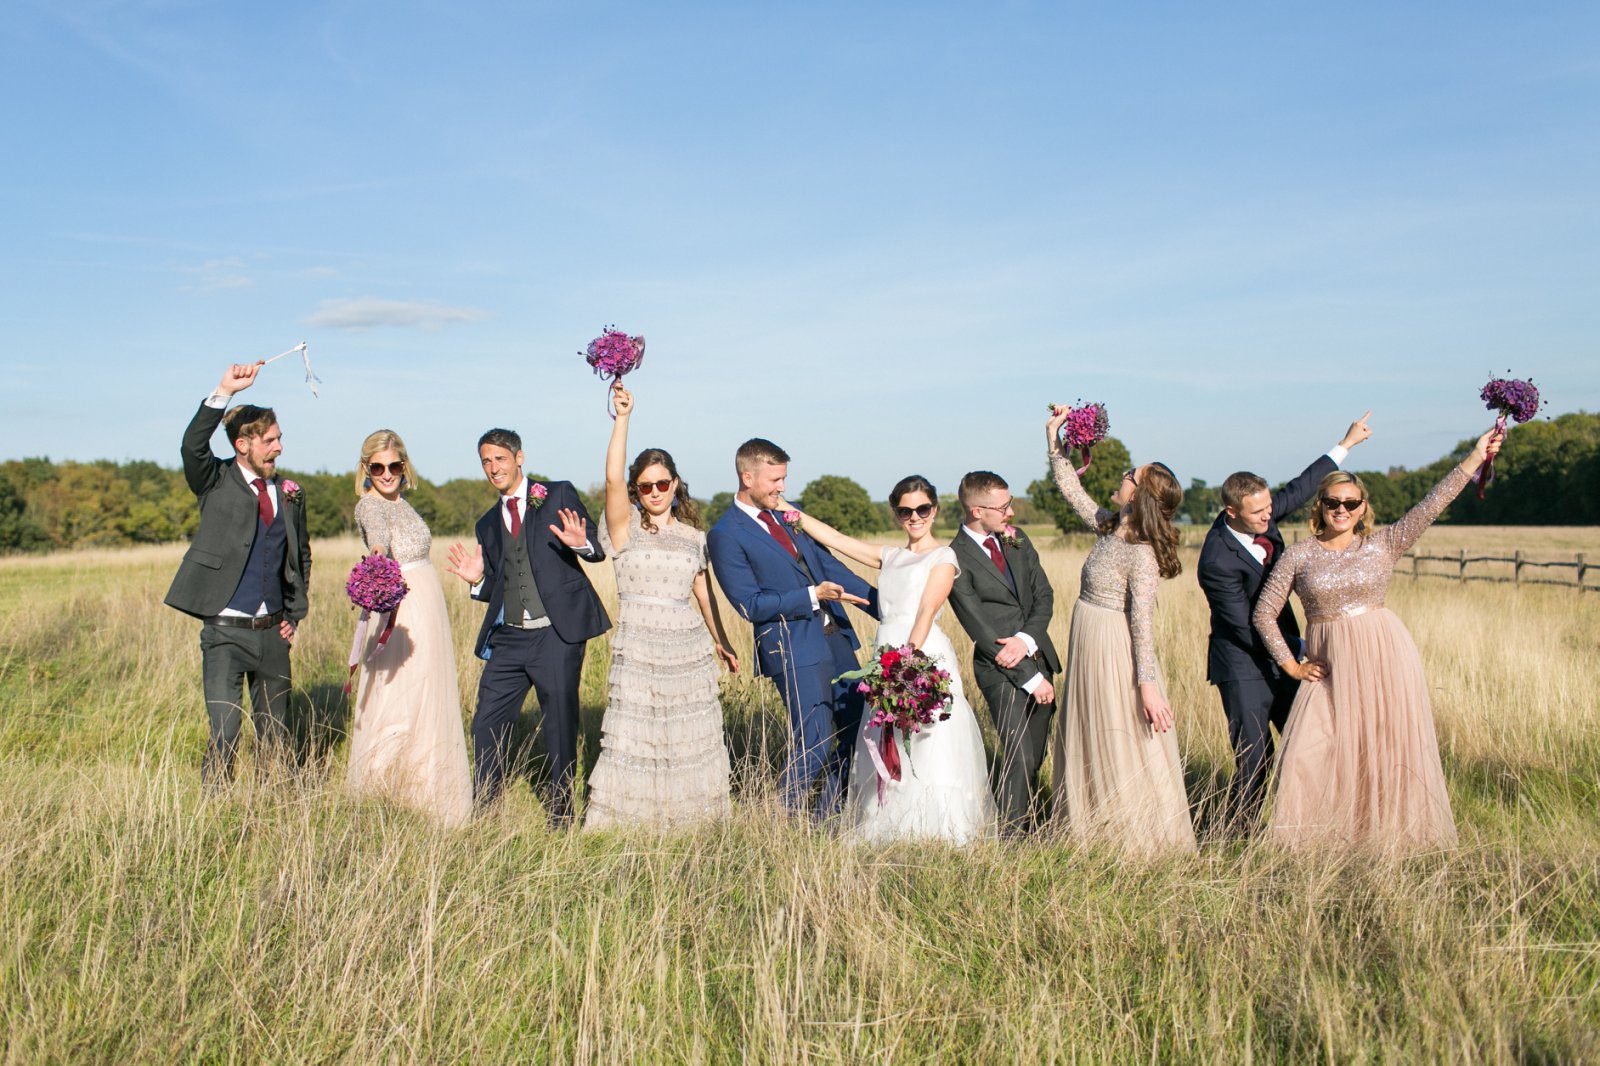 Fun wedding party photos at High Billinghurst Farm by Anneli Marinovich